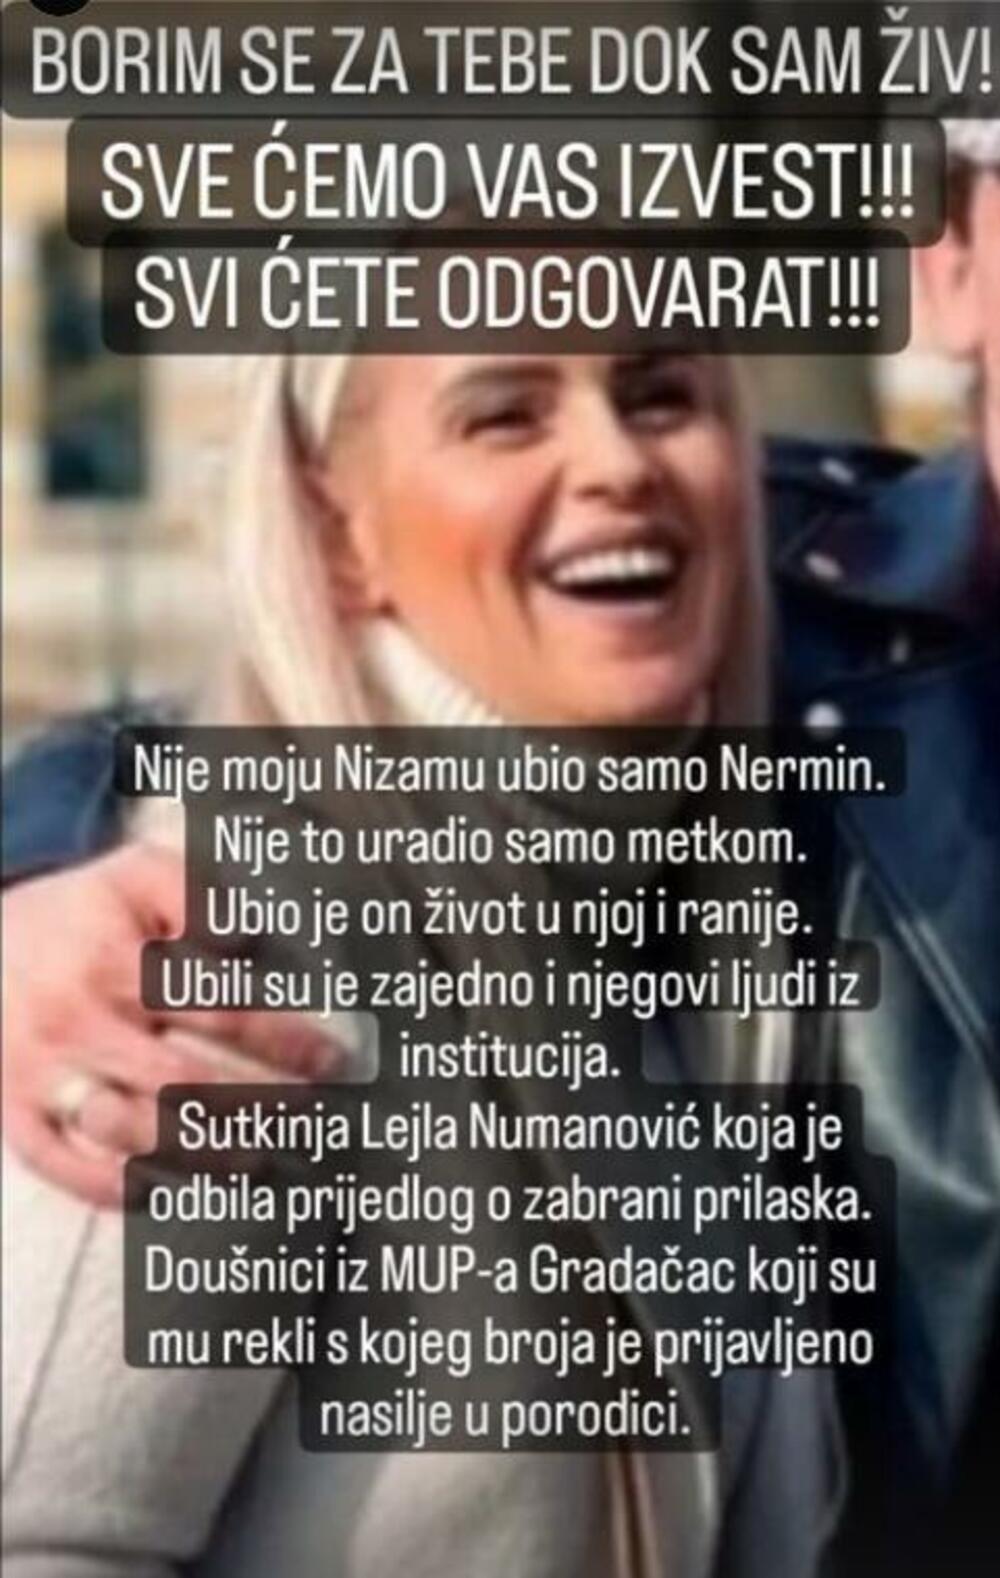 Nizama Hećimović